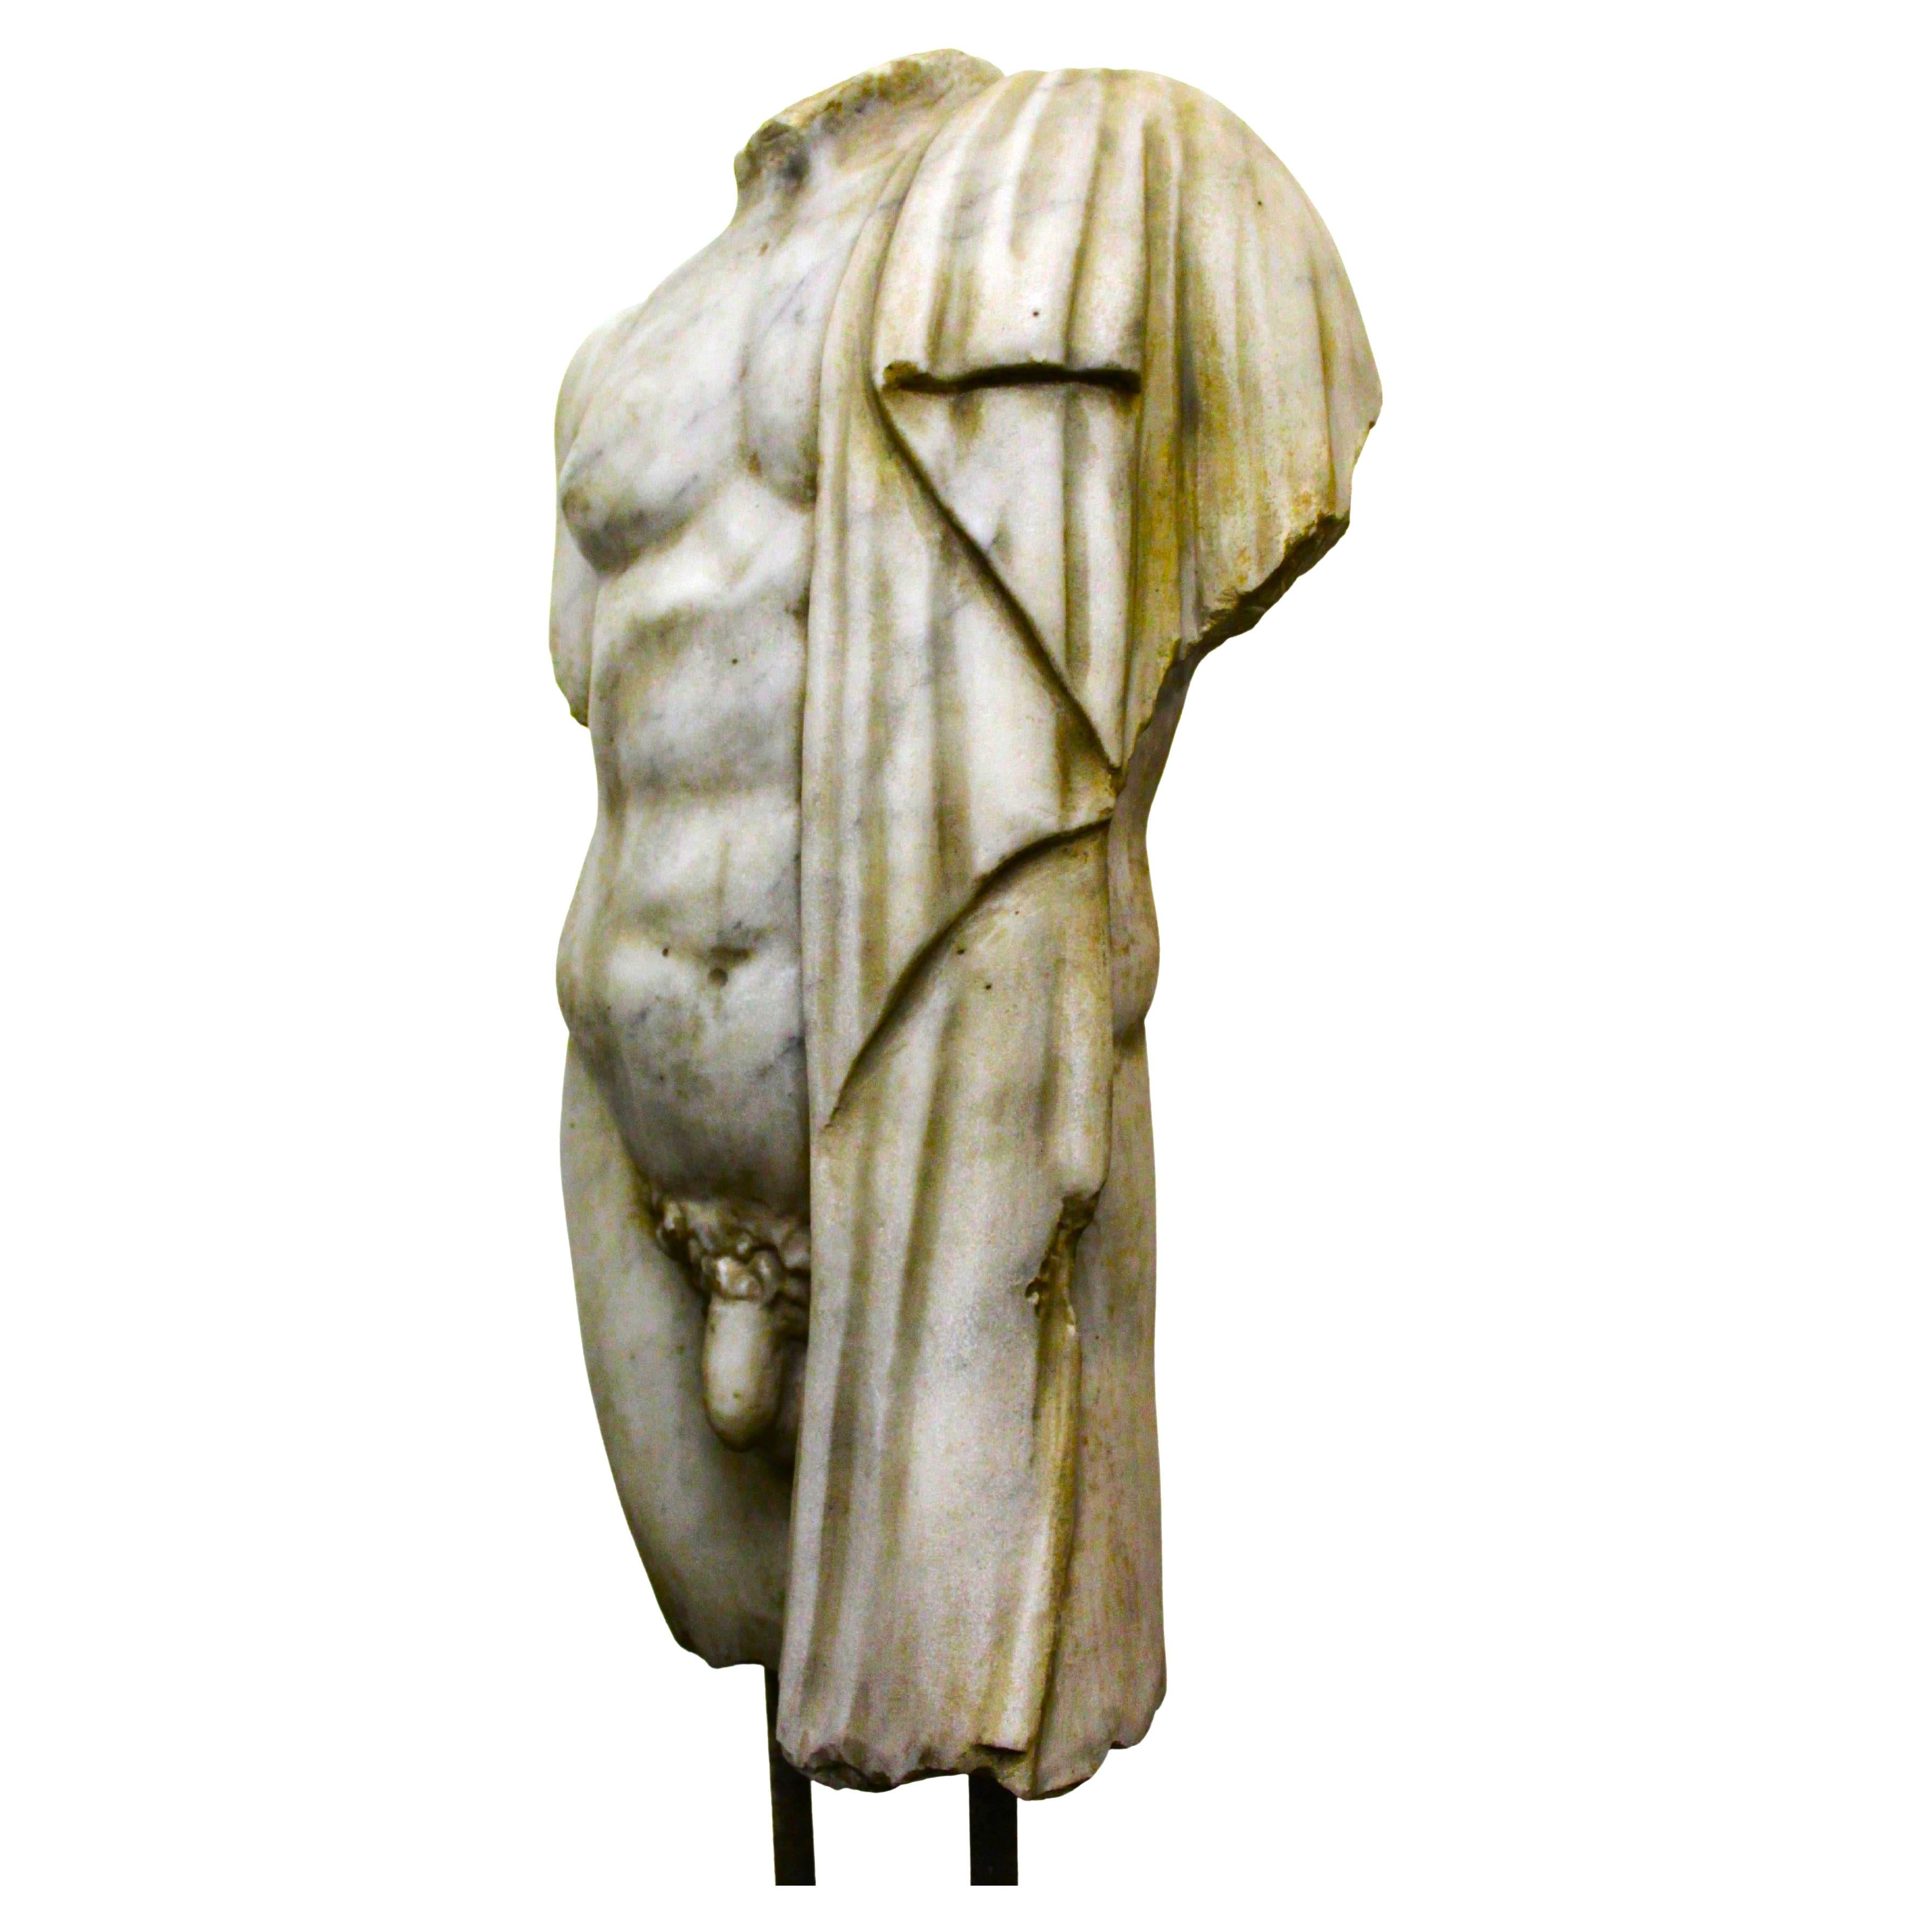 Sculpture torse en marbre, 116 cm de haut, socle compris 

Torso in marmo, alto 116 C, compreso di base.